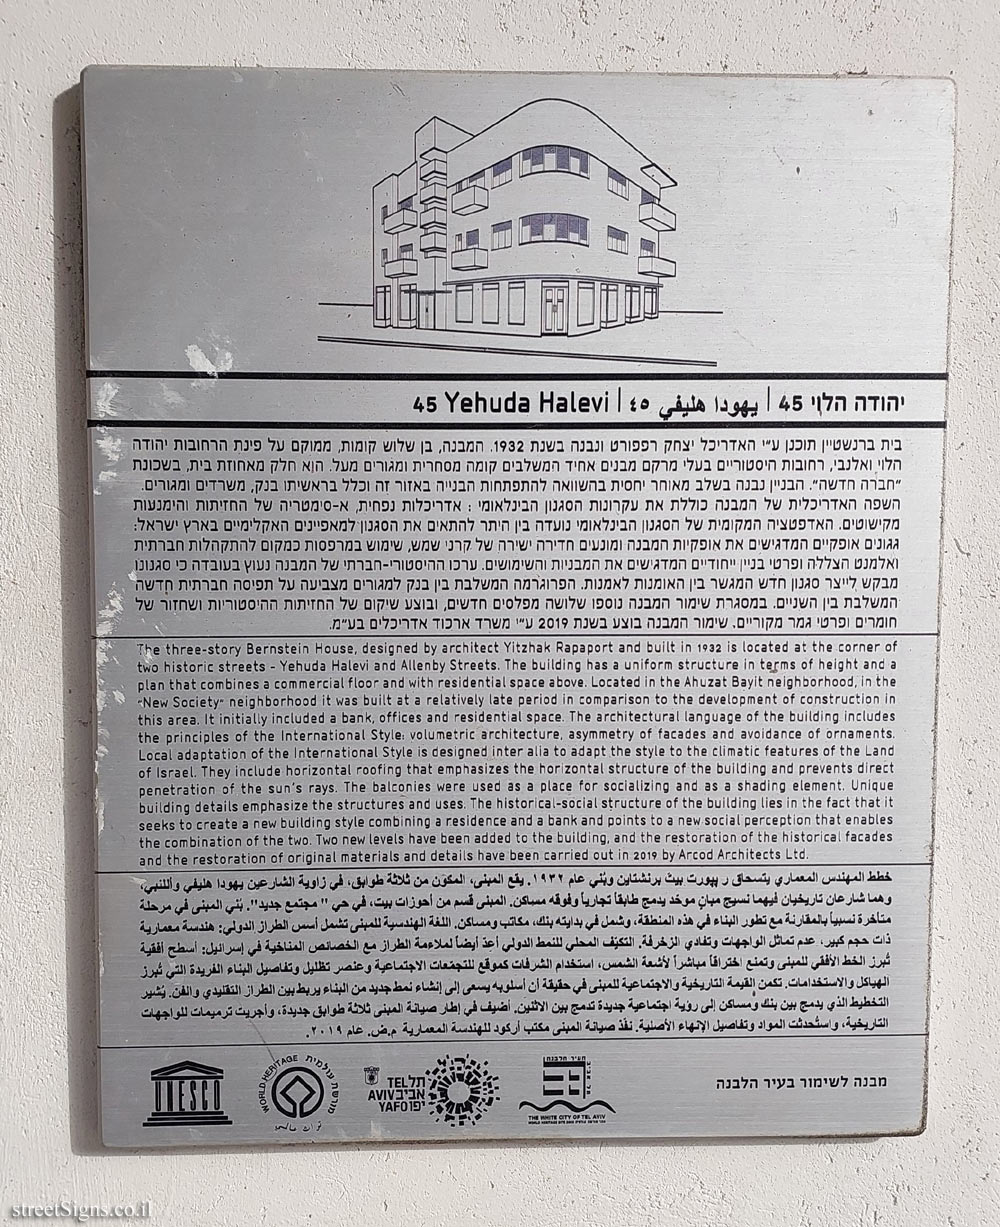 Tel Aviv - buildings for conservation - 45 Yehuda Halevi